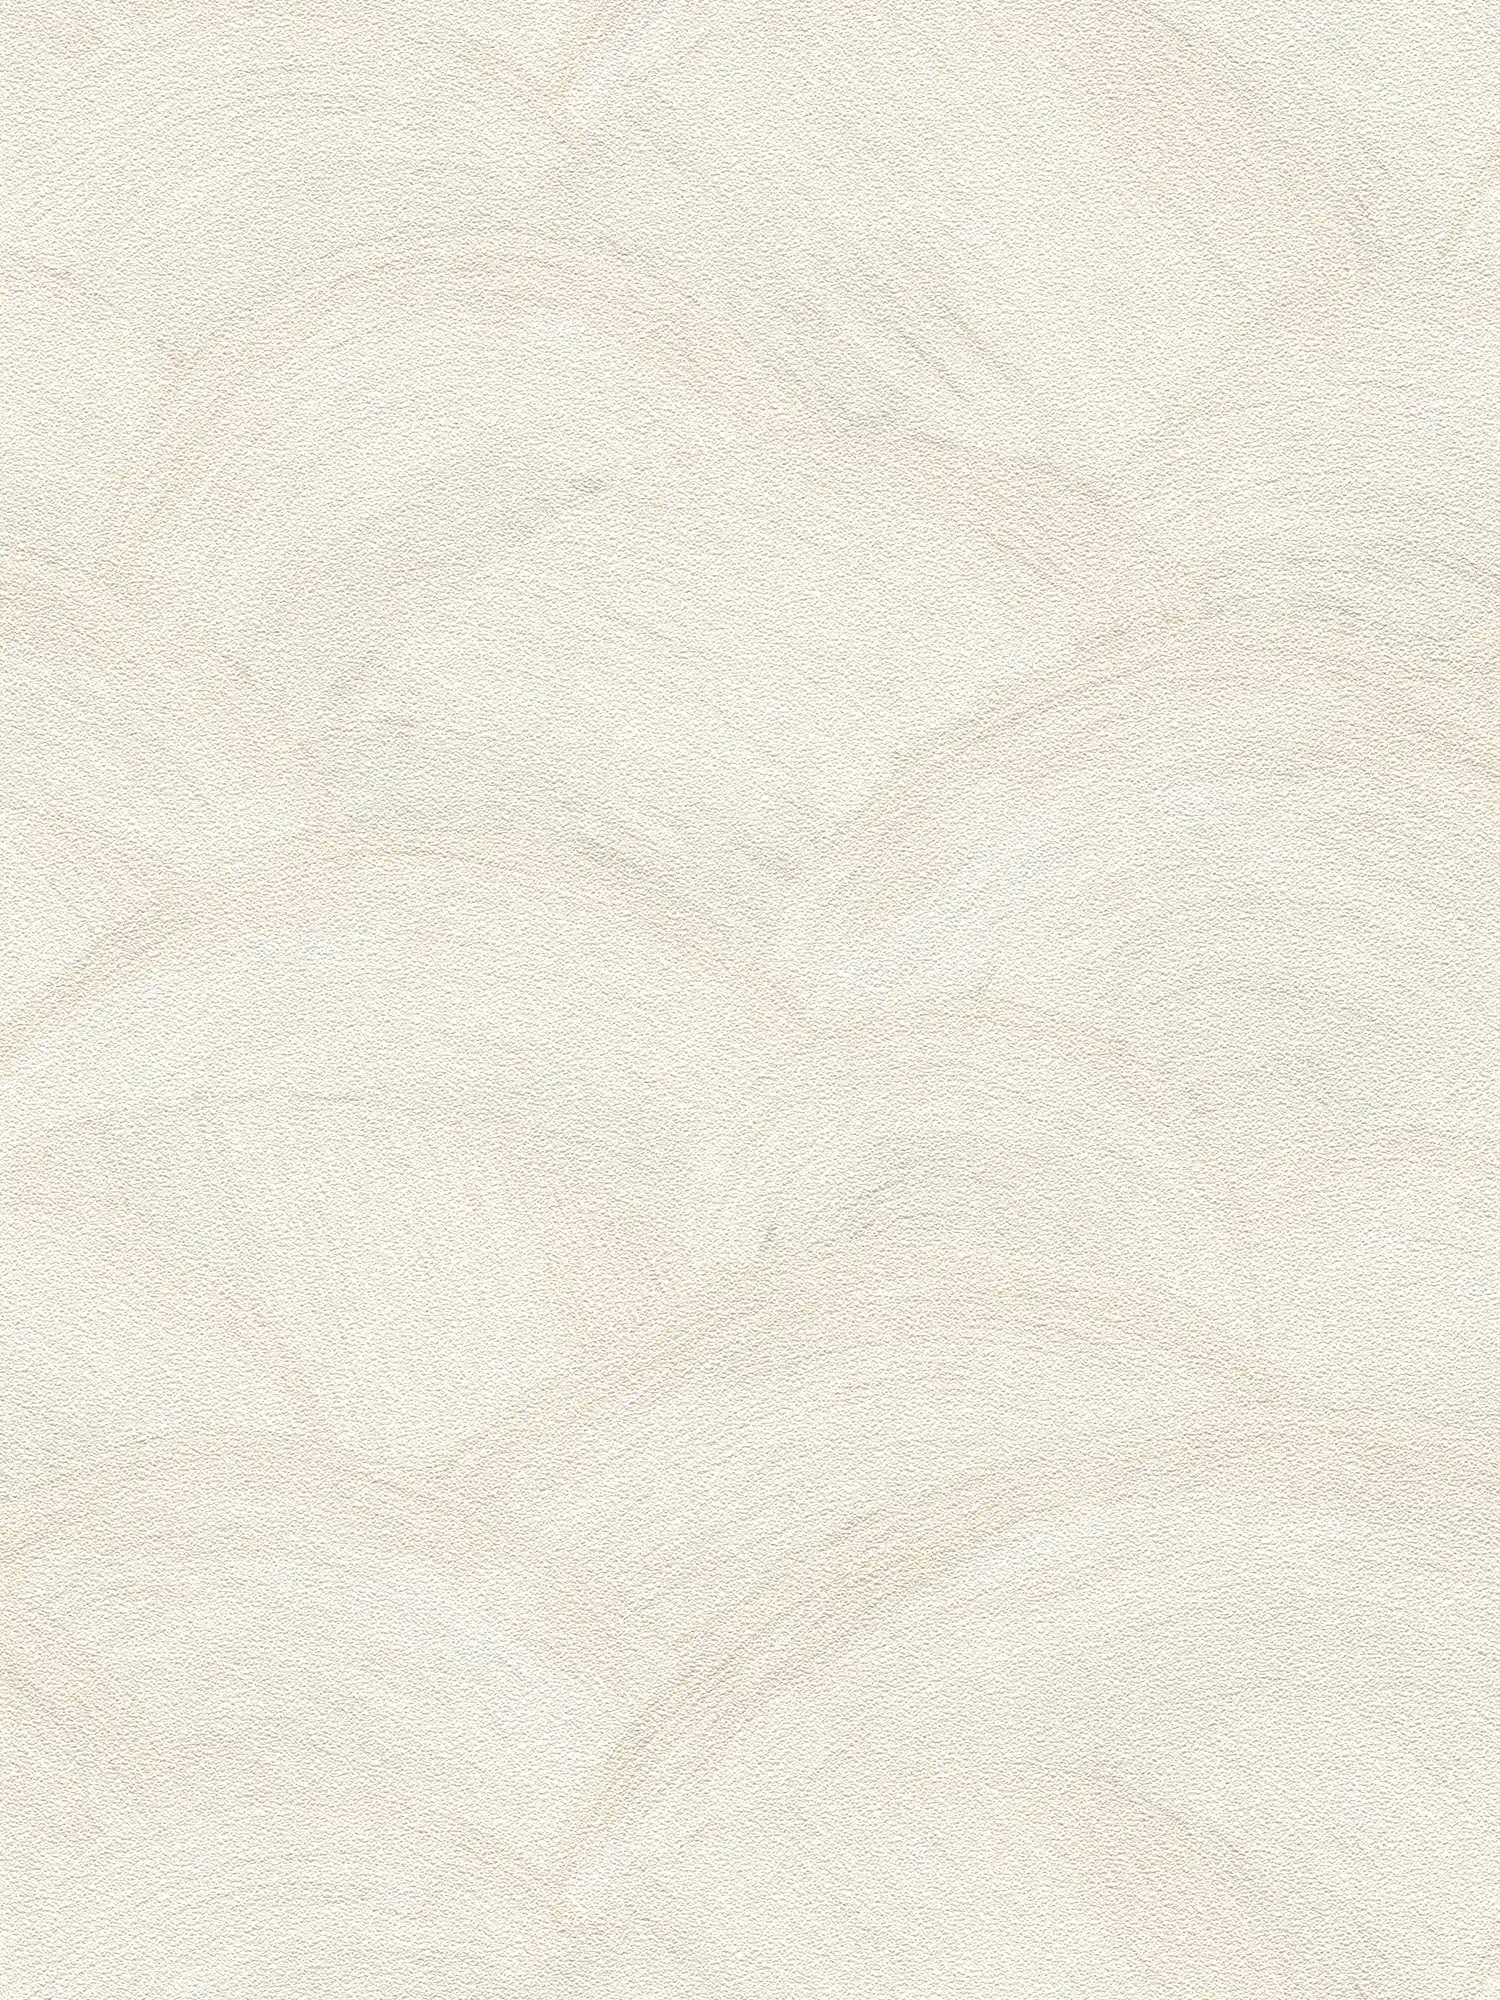 Papel pintado no tejido con sutil motivo ondulado - blanco, crema, gris
